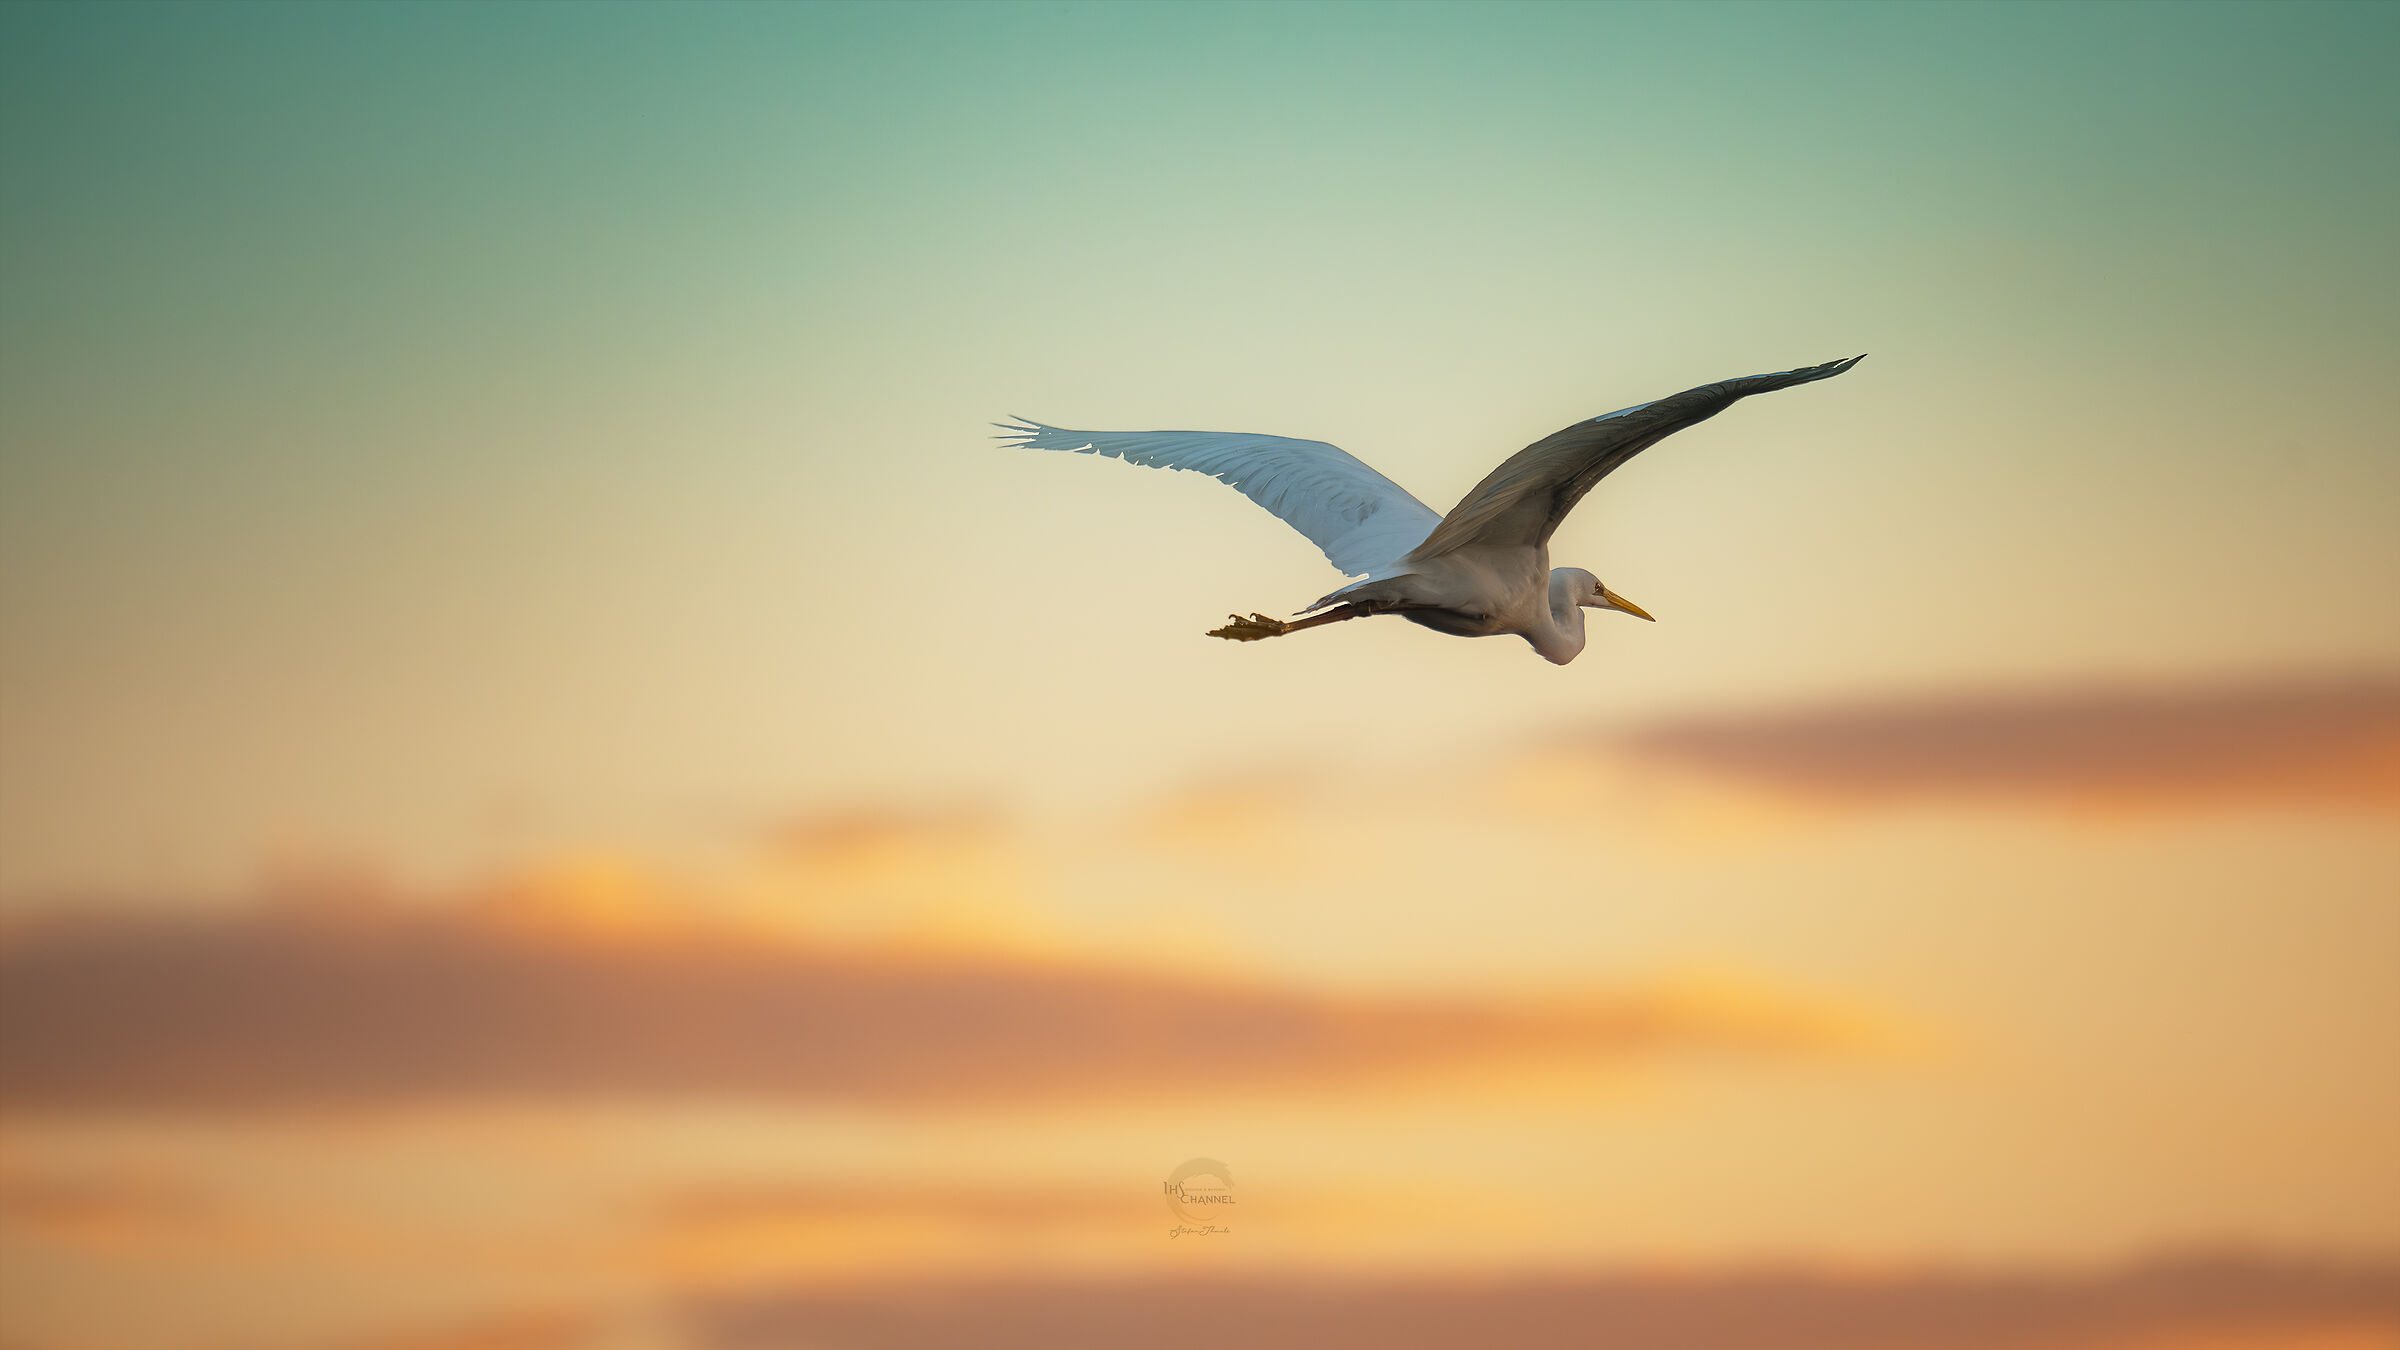 Heron in flight at the crack of dawn...